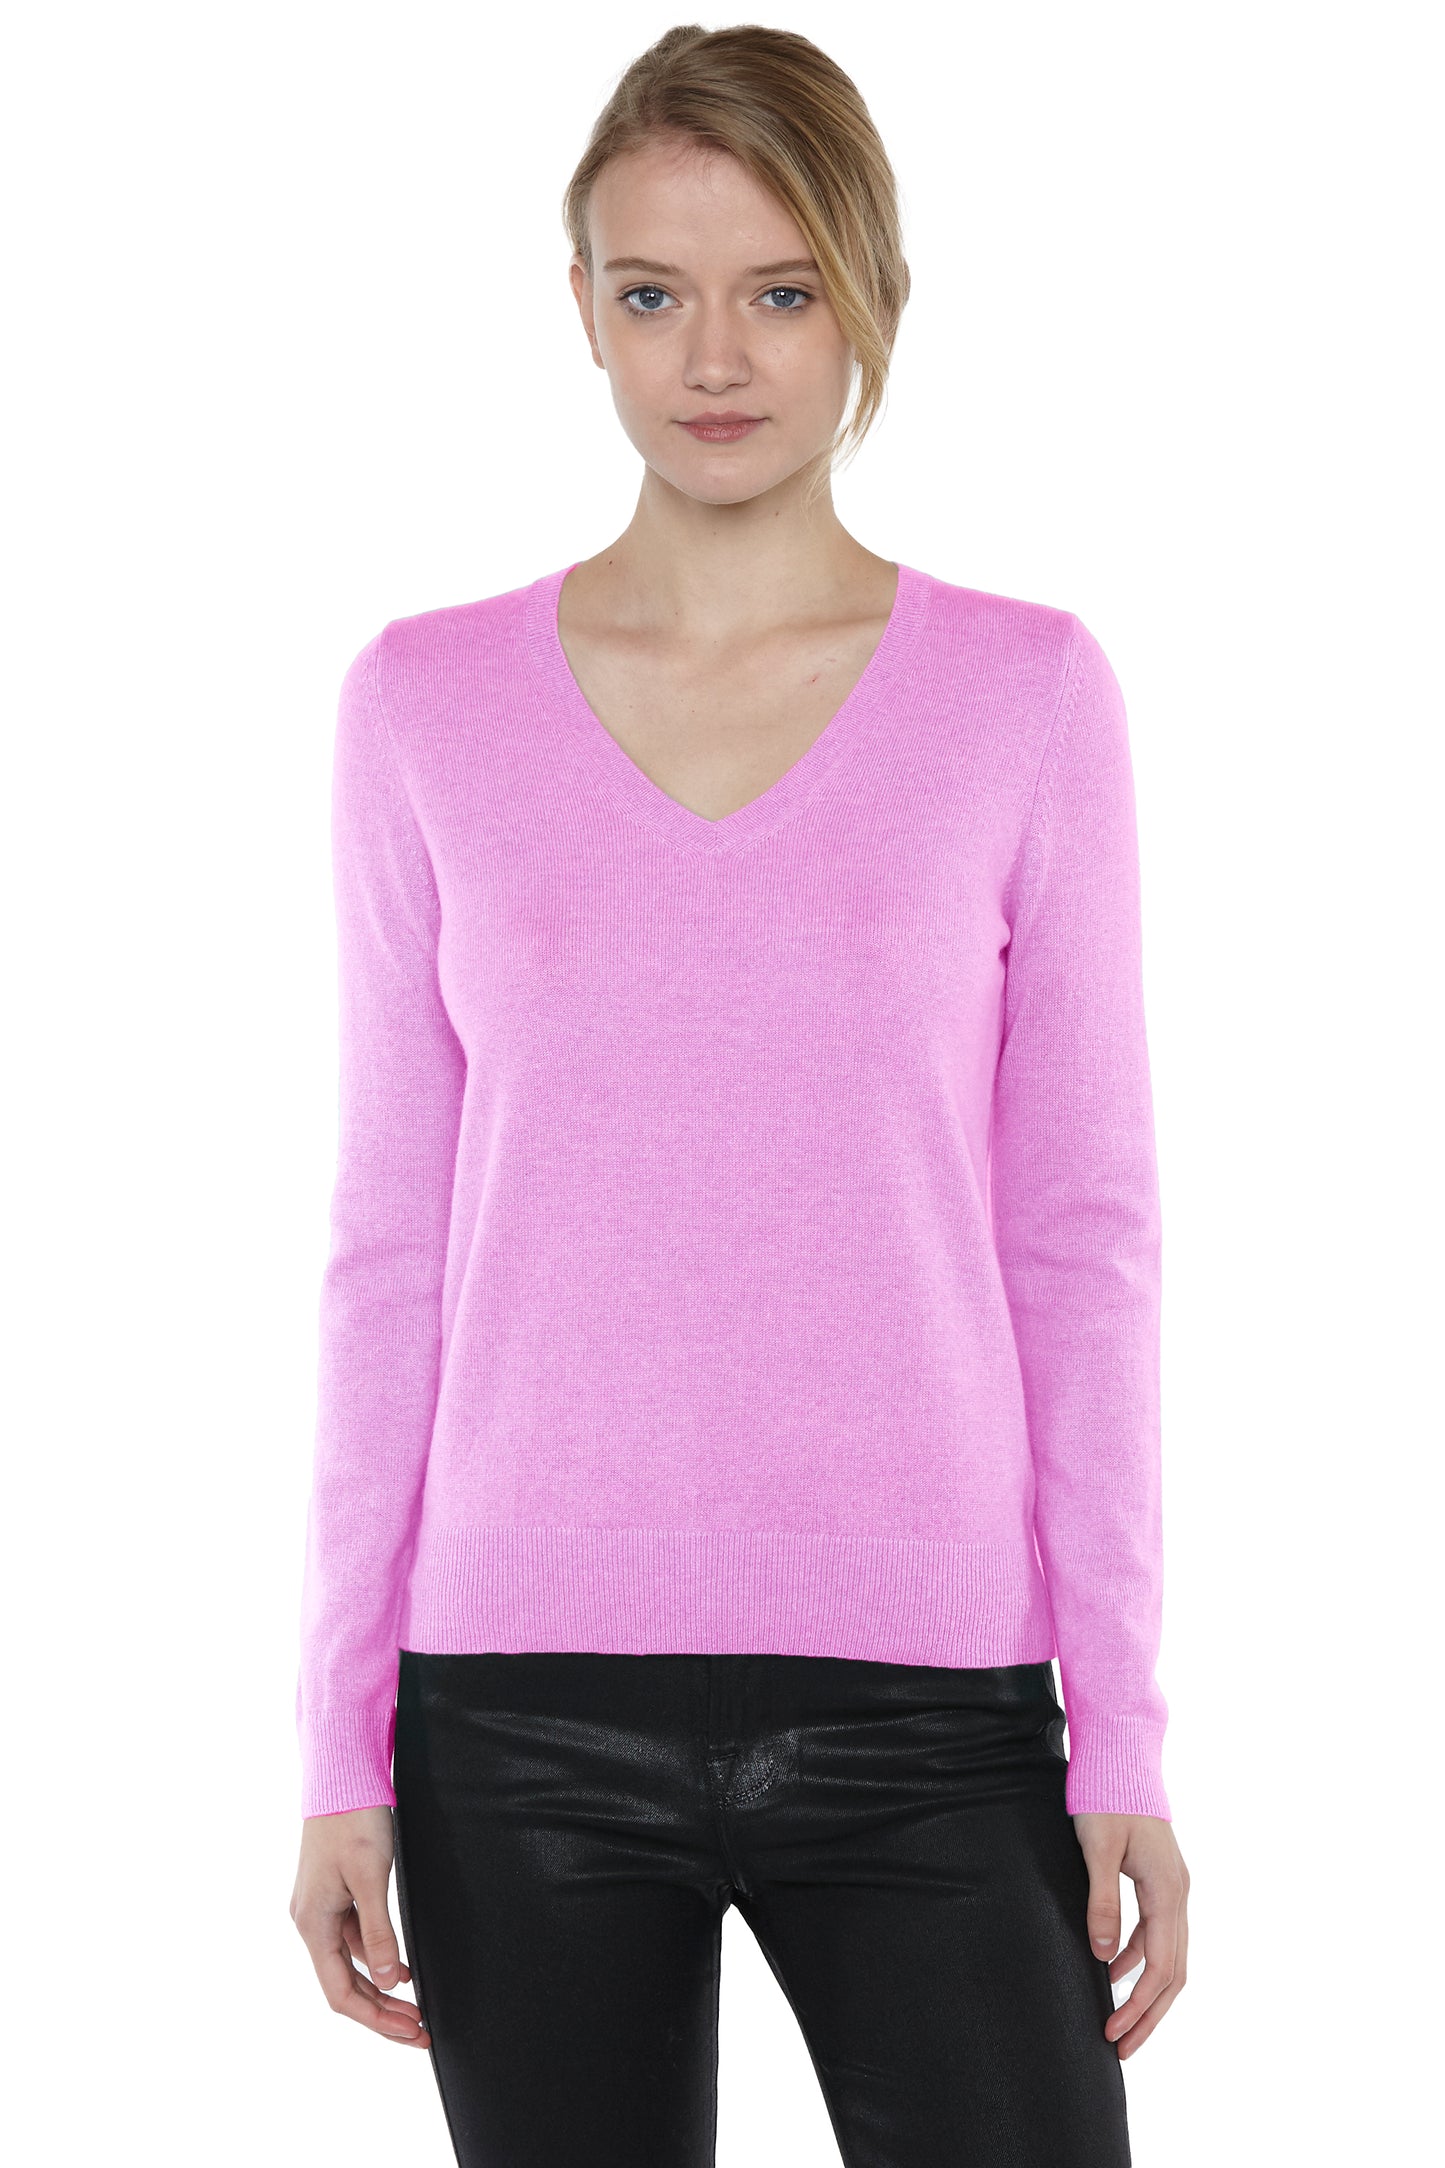 JENNIE LIU Women's 100% Pure Cashmere Long Sleeve Pullover V Neck Sweater 8160